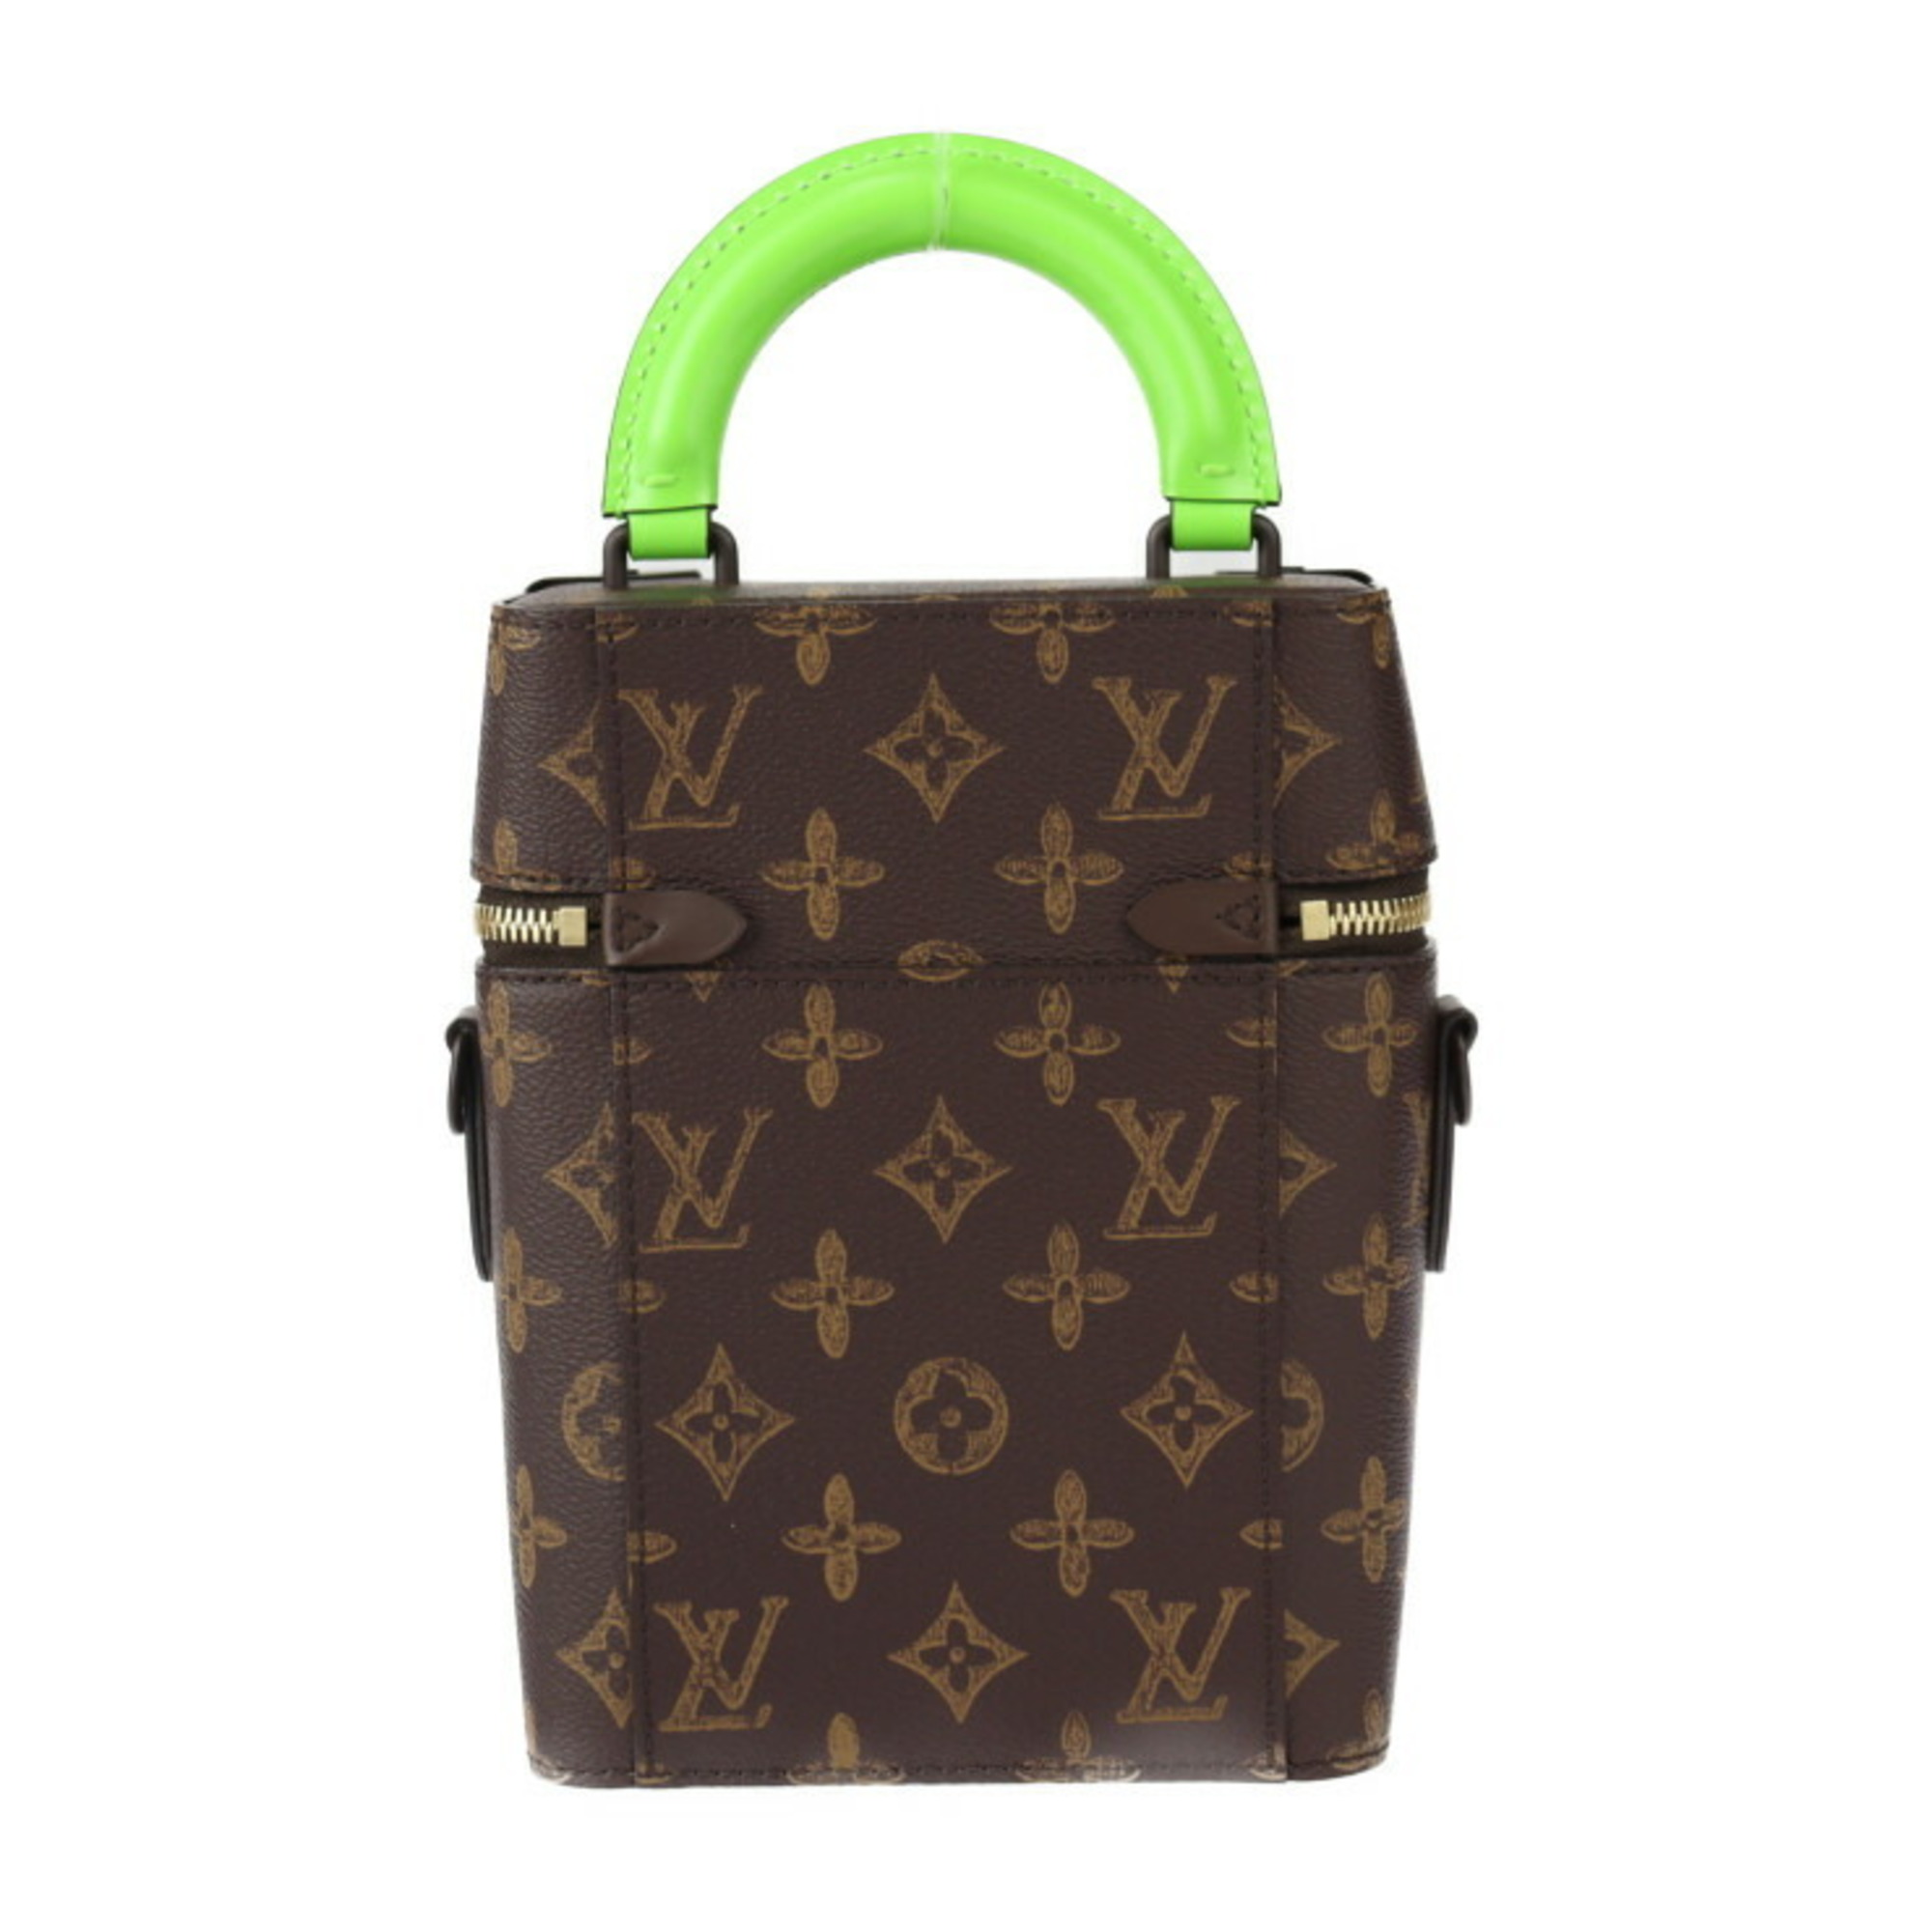 LOUIS VUITTON Louis Vuitton Vertical Box Trunk Handbag M59664 Monogram Canvas Leather Brown Green Shoulder Bag